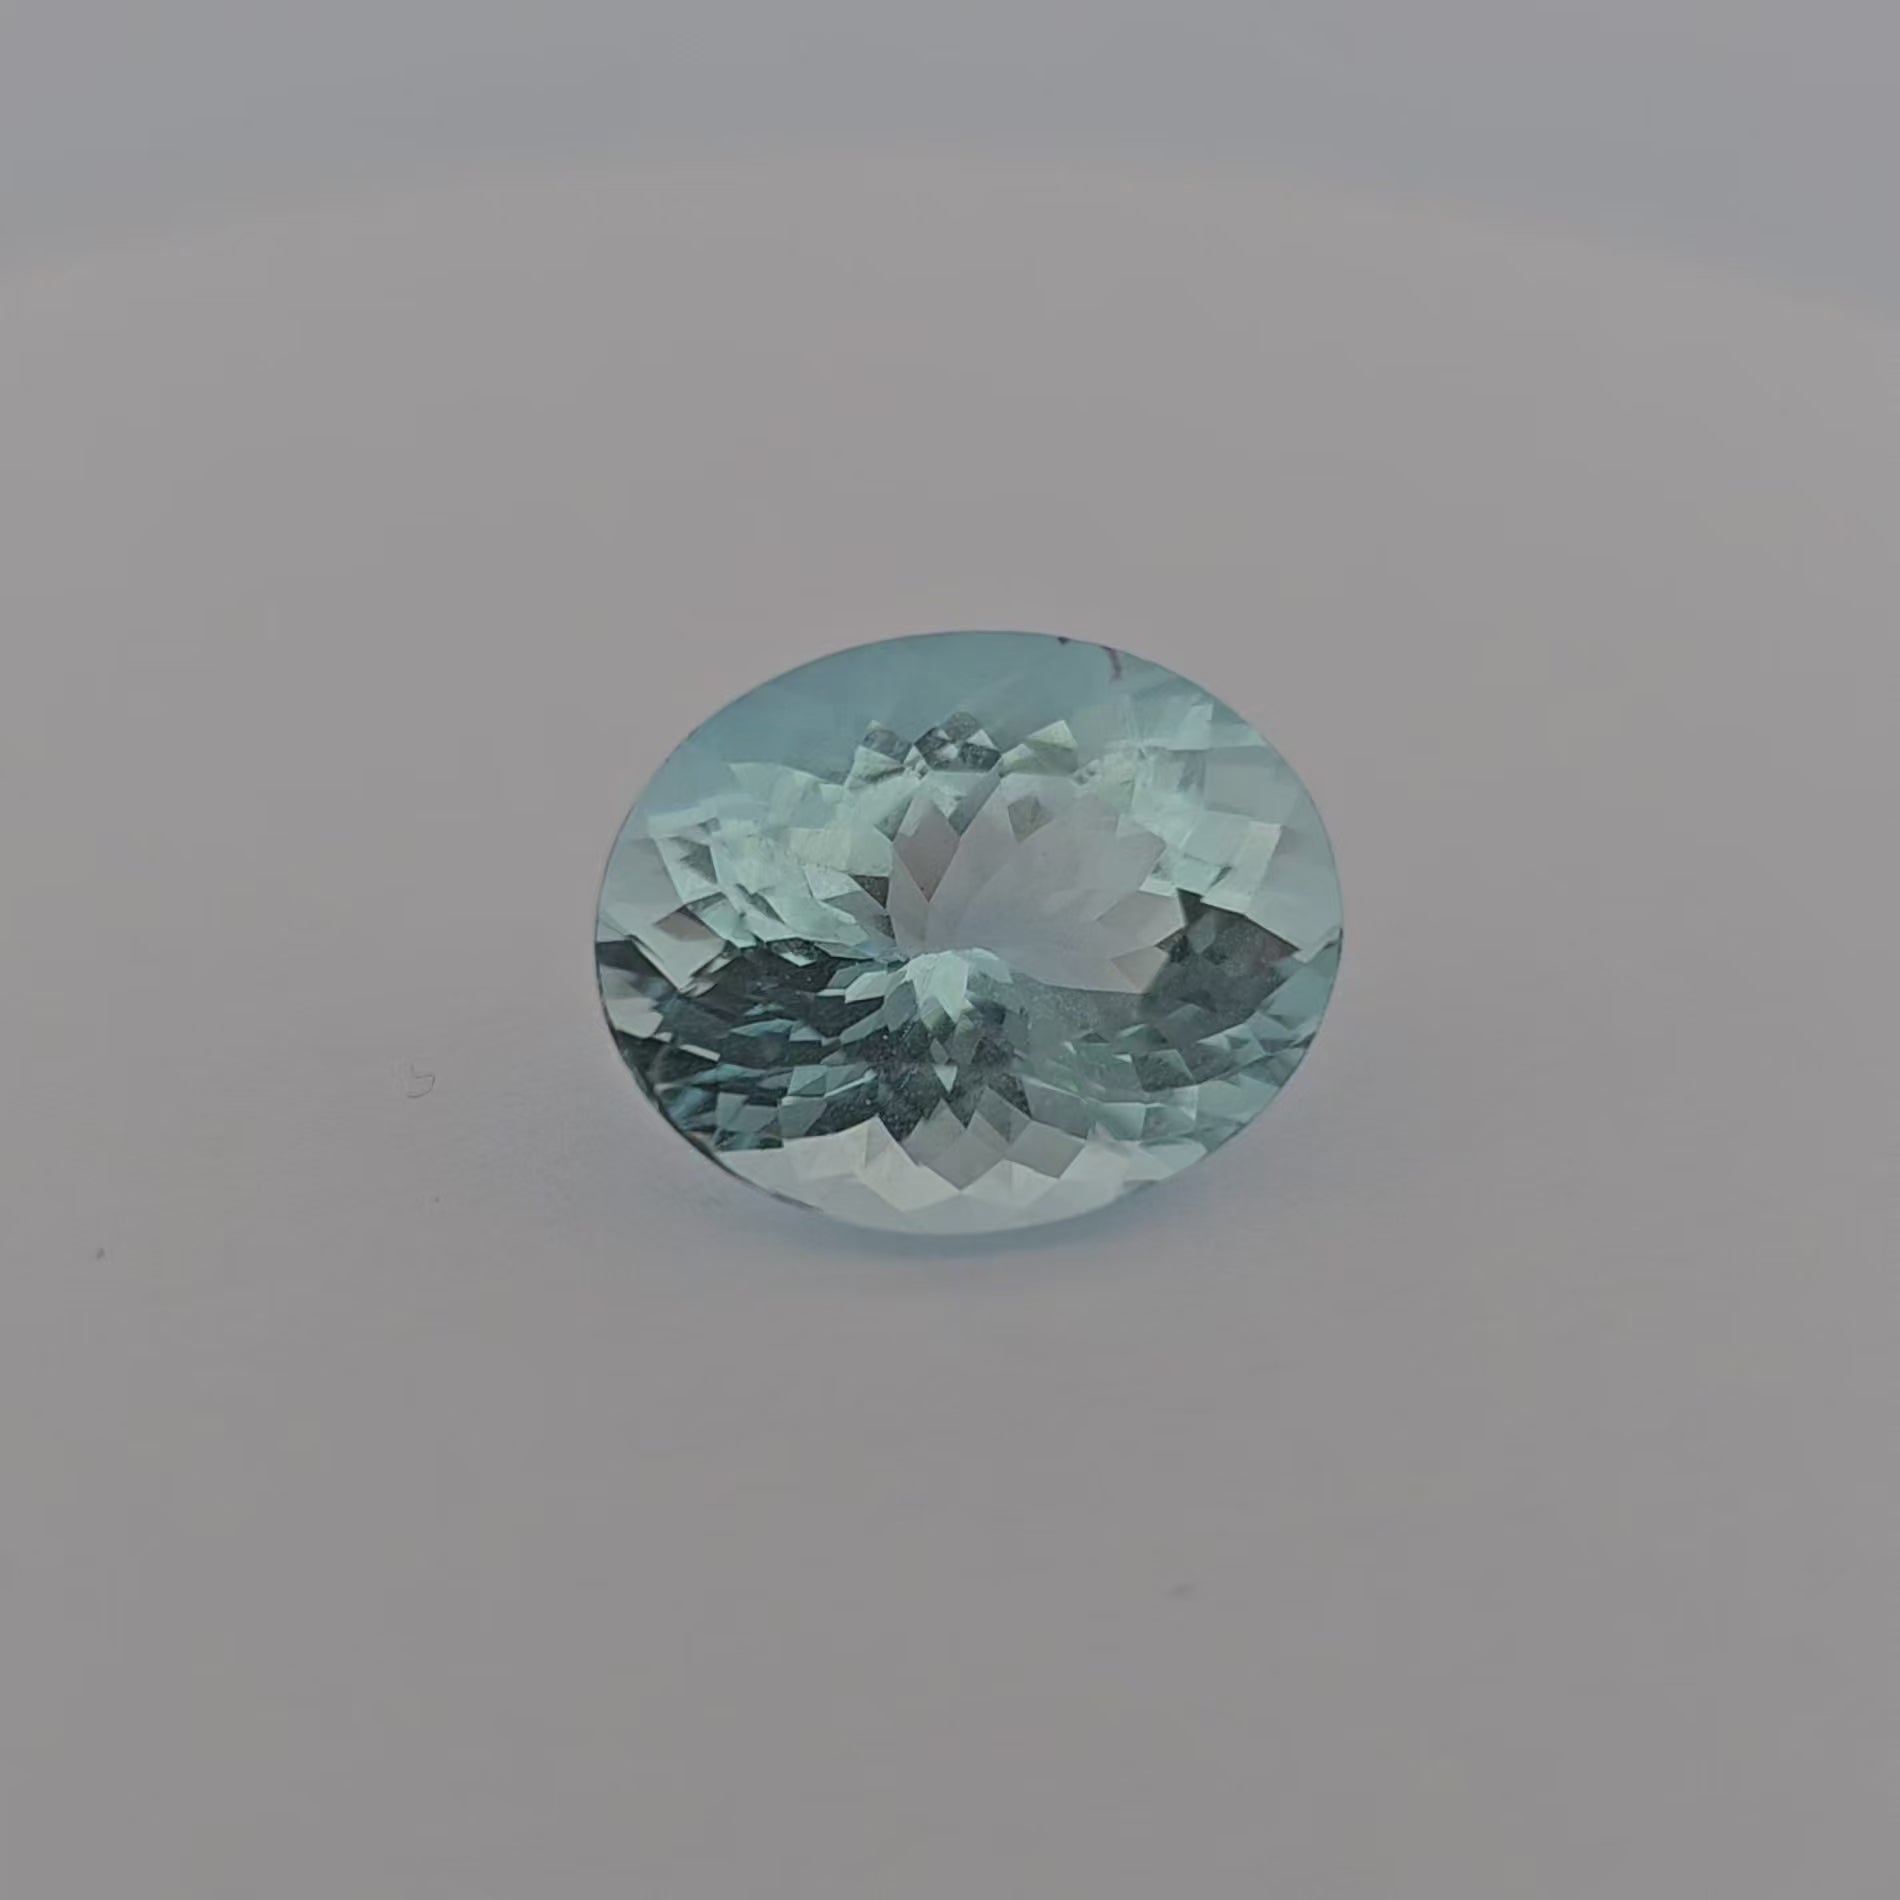 loose Natural Aquamarine Stone 7.93 Carats Oval Shape 15.6 x 12.9 mm